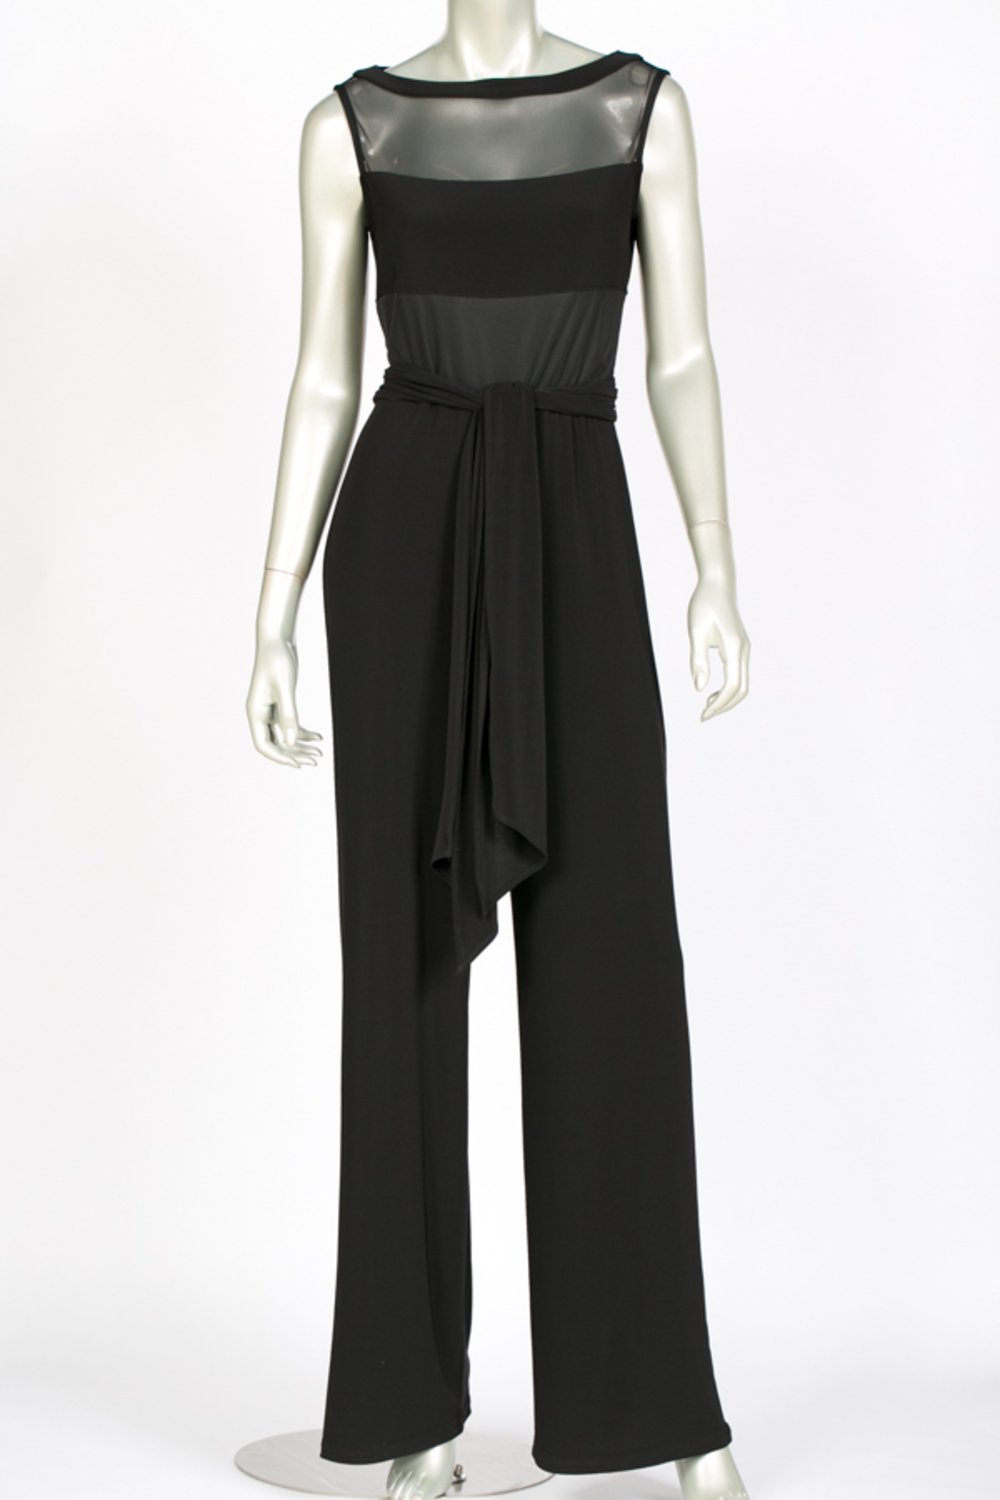 Joseph Ribkoff jumpsuit style 143082. Black/black